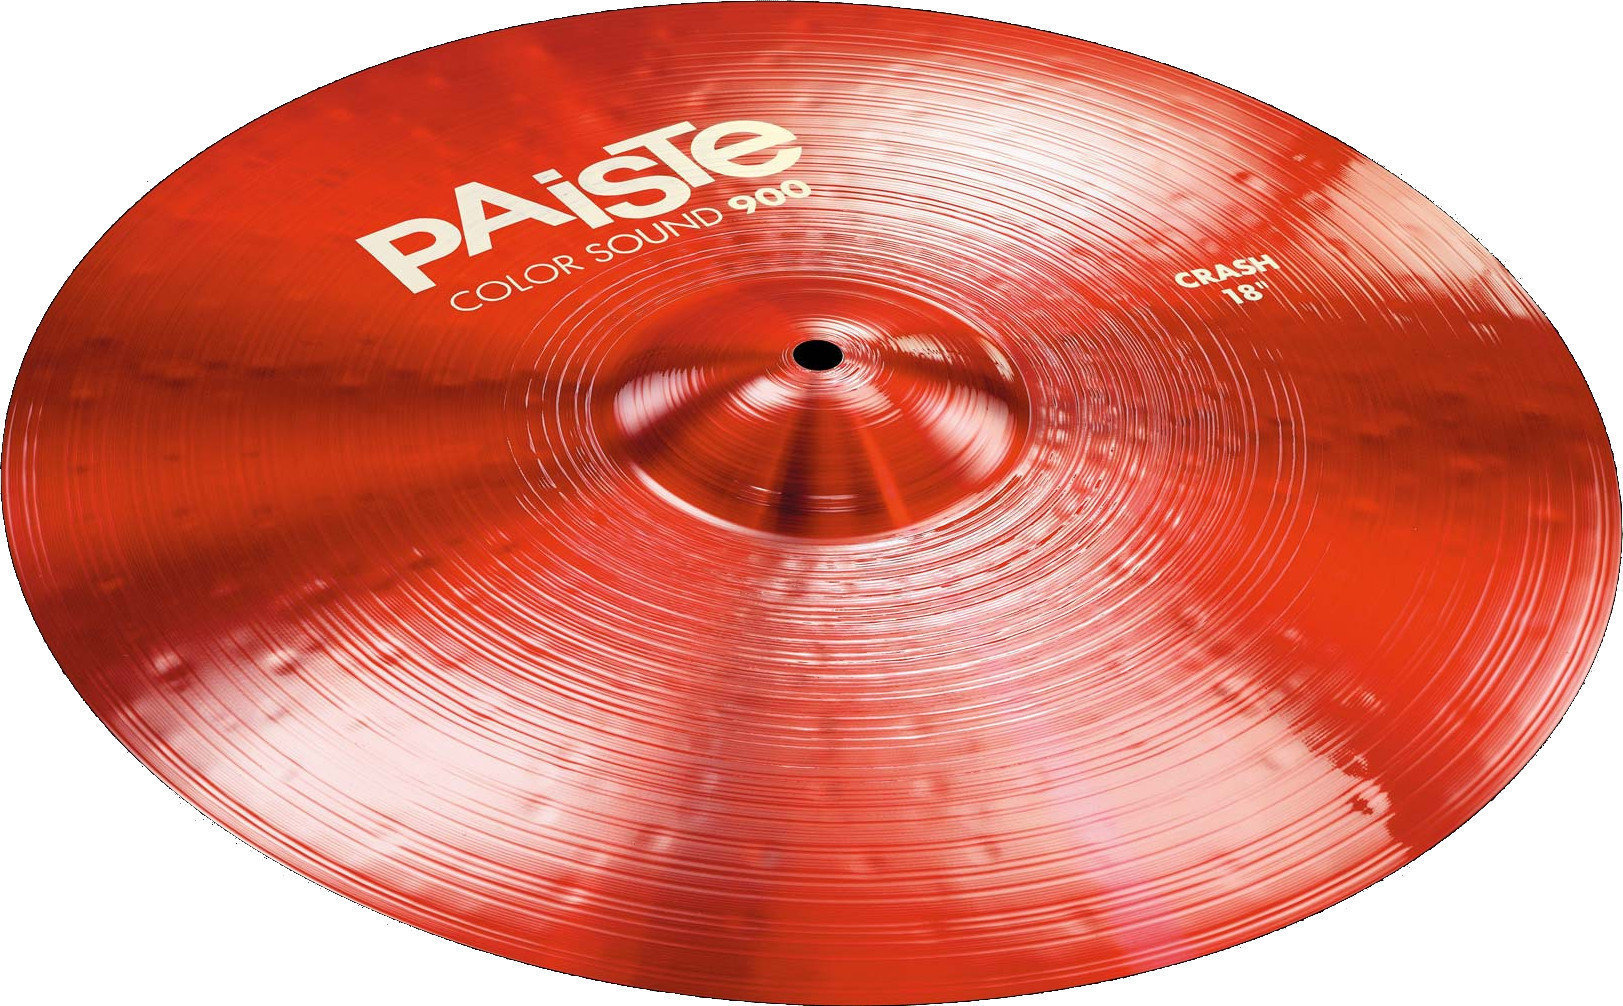 Cymbale crash Paiste Color Sound 900 Cymbale crash 16" Rouge